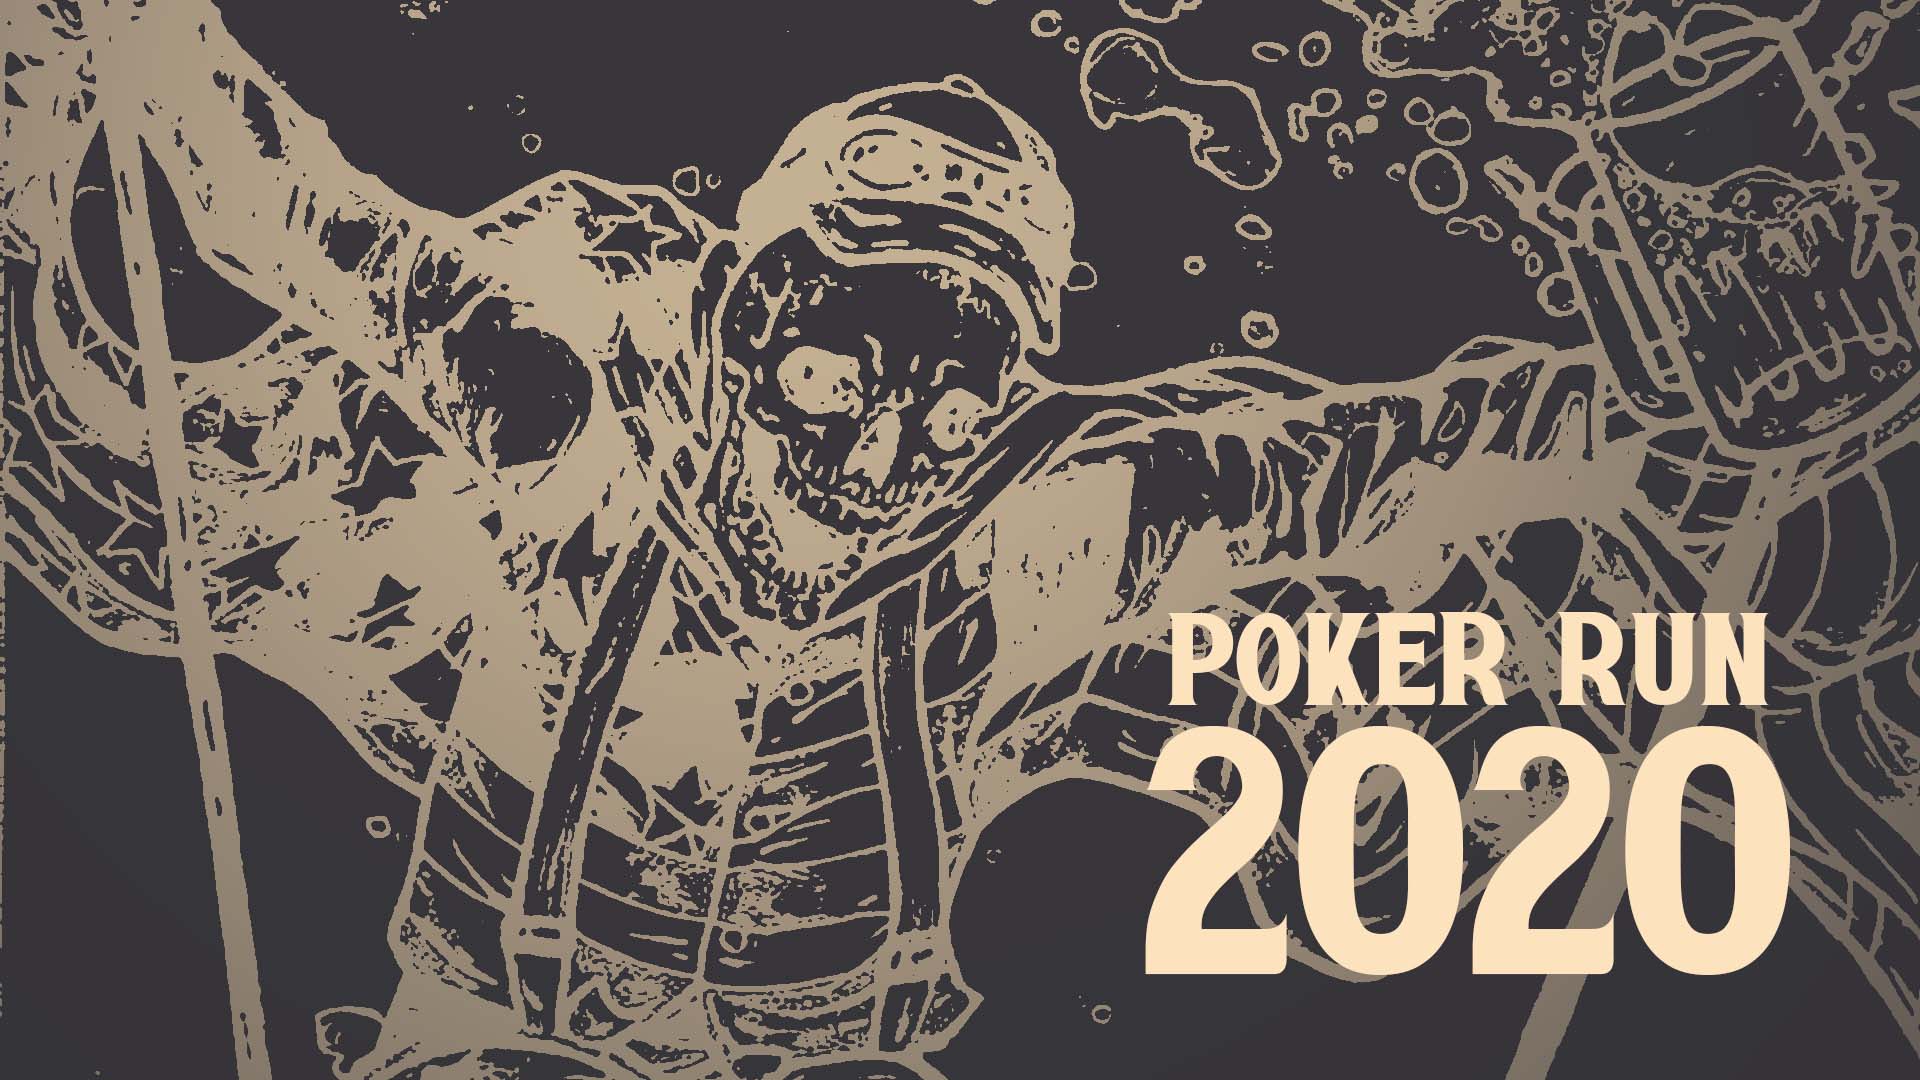 Poker run laramie wy 2019 calendar